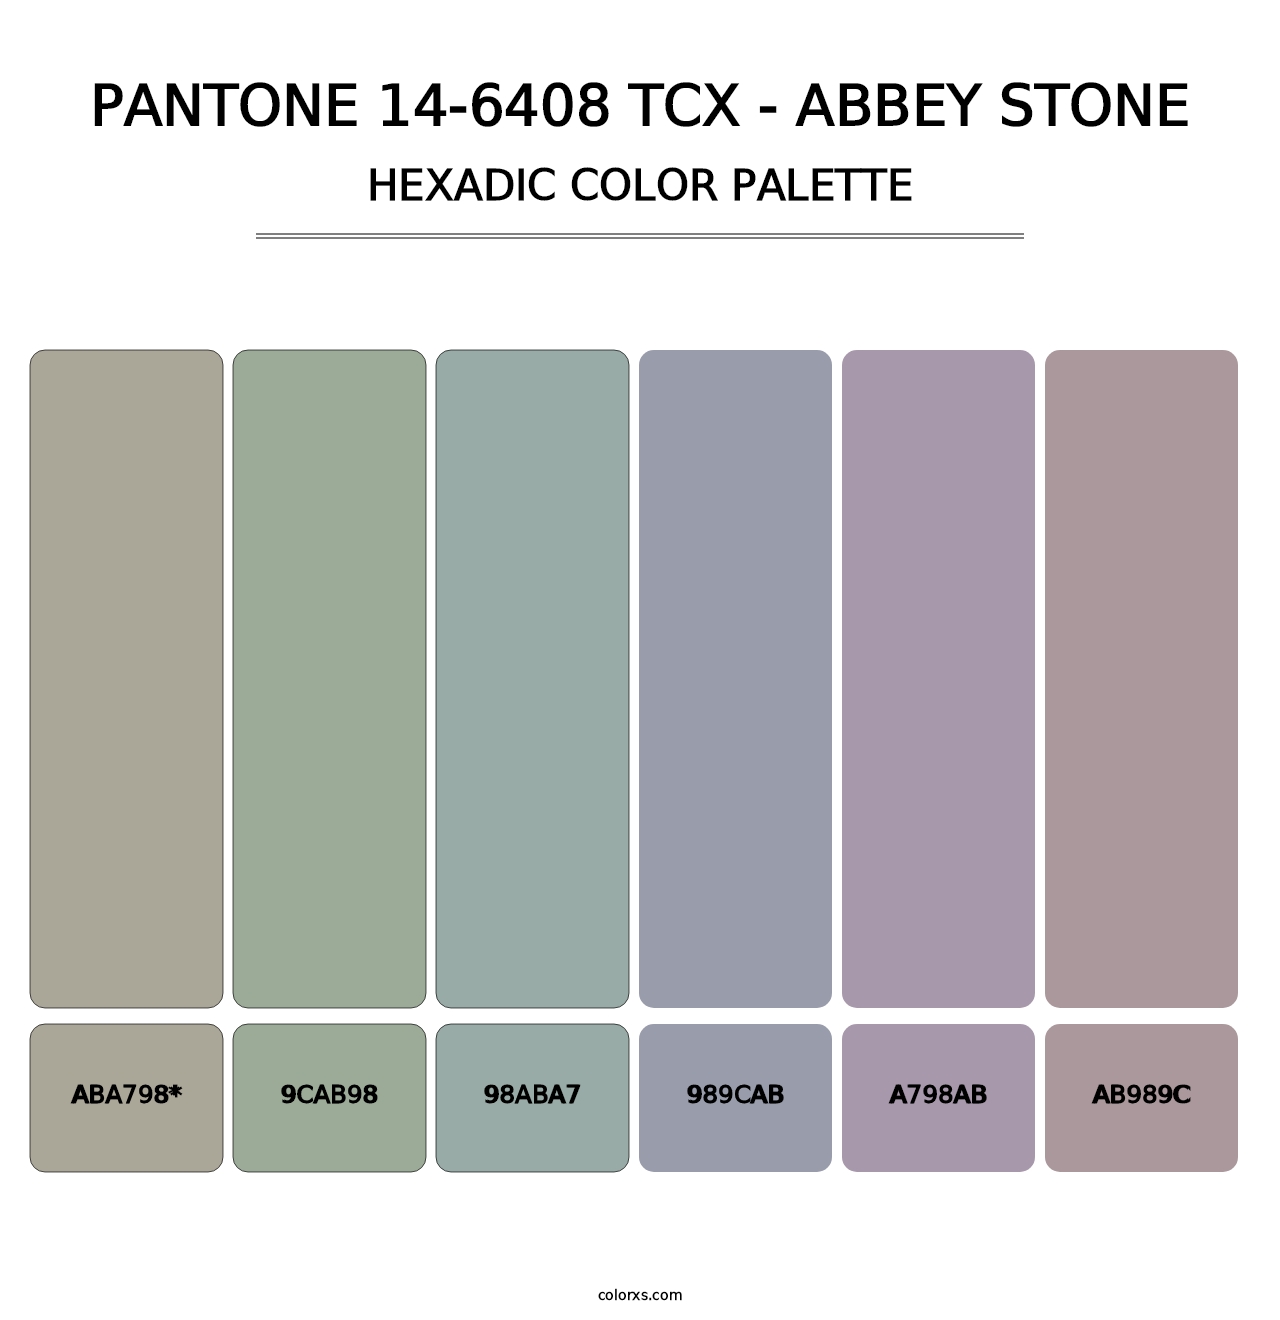 PANTONE 14-6408 TCX - Abbey Stone - Hexadic Color Palette